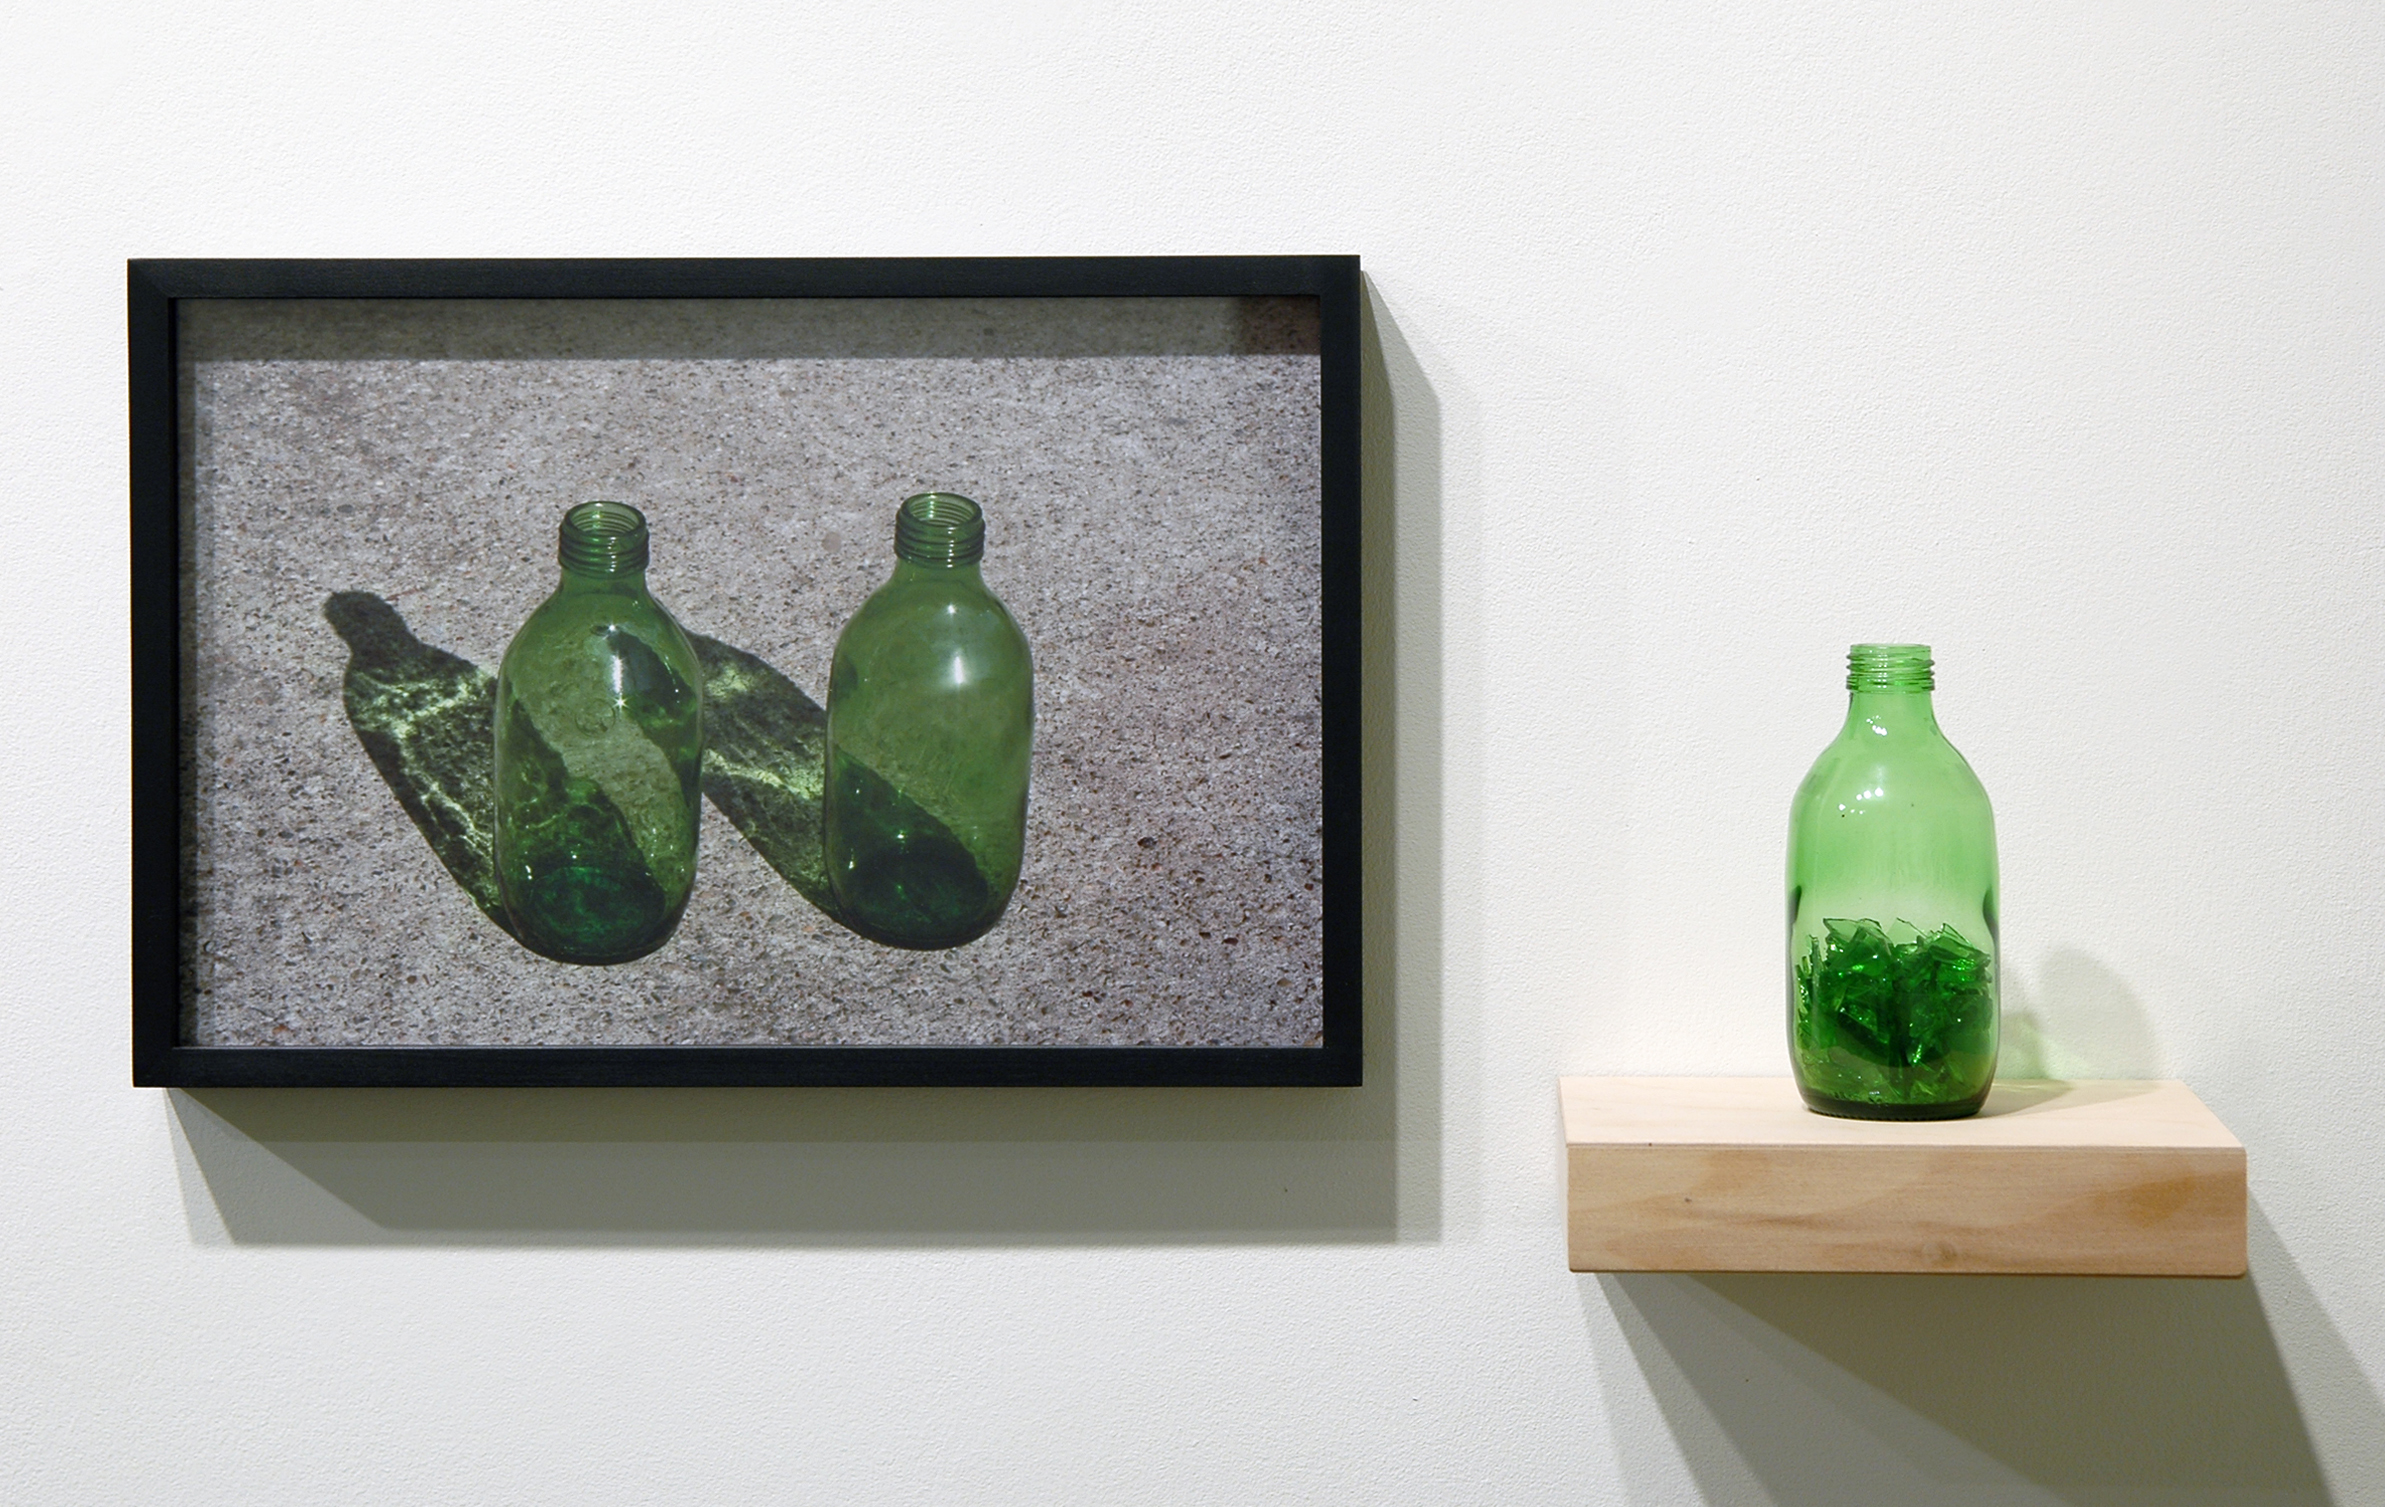   WITH CINDER BLOCKS WE FLATTEN OUR PHOTOGRAPHS  Pablo Guardiola,&nbsp; Untitled , c-print, glass bottle, broken glass and shelf, 26" x 12.5" x 6", 2013 